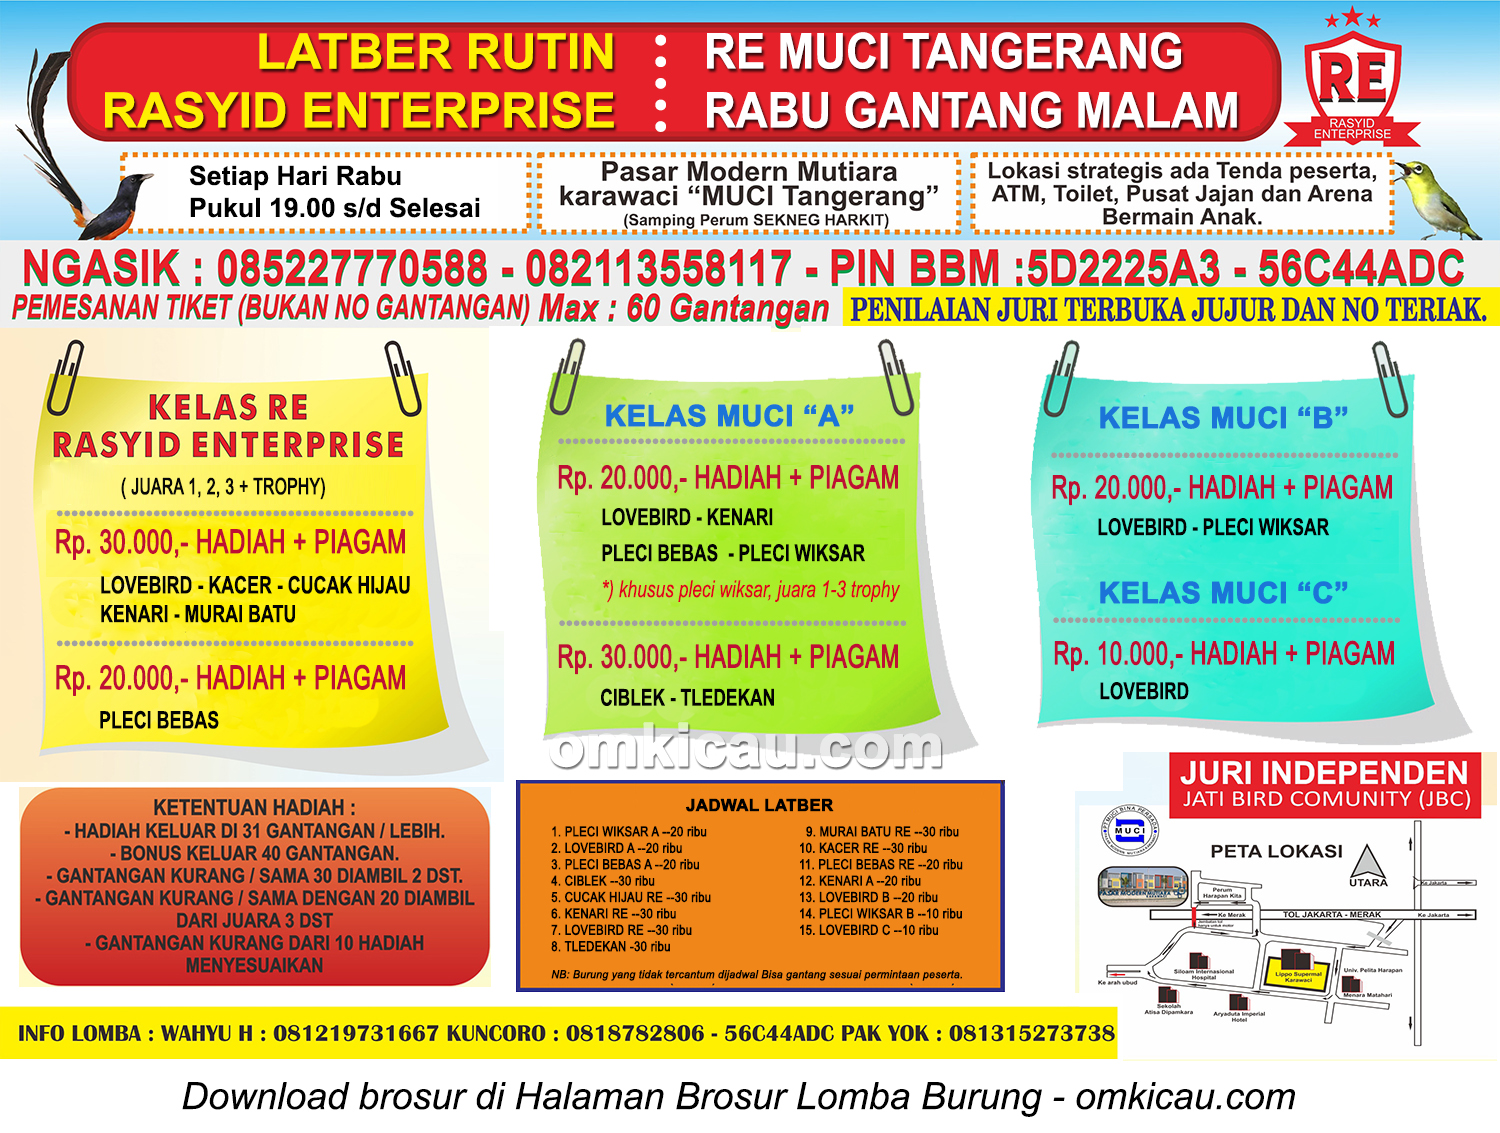 Brosur Latber Rutin RE Muci Tangerang - Edisi Rabu Gantang Malam